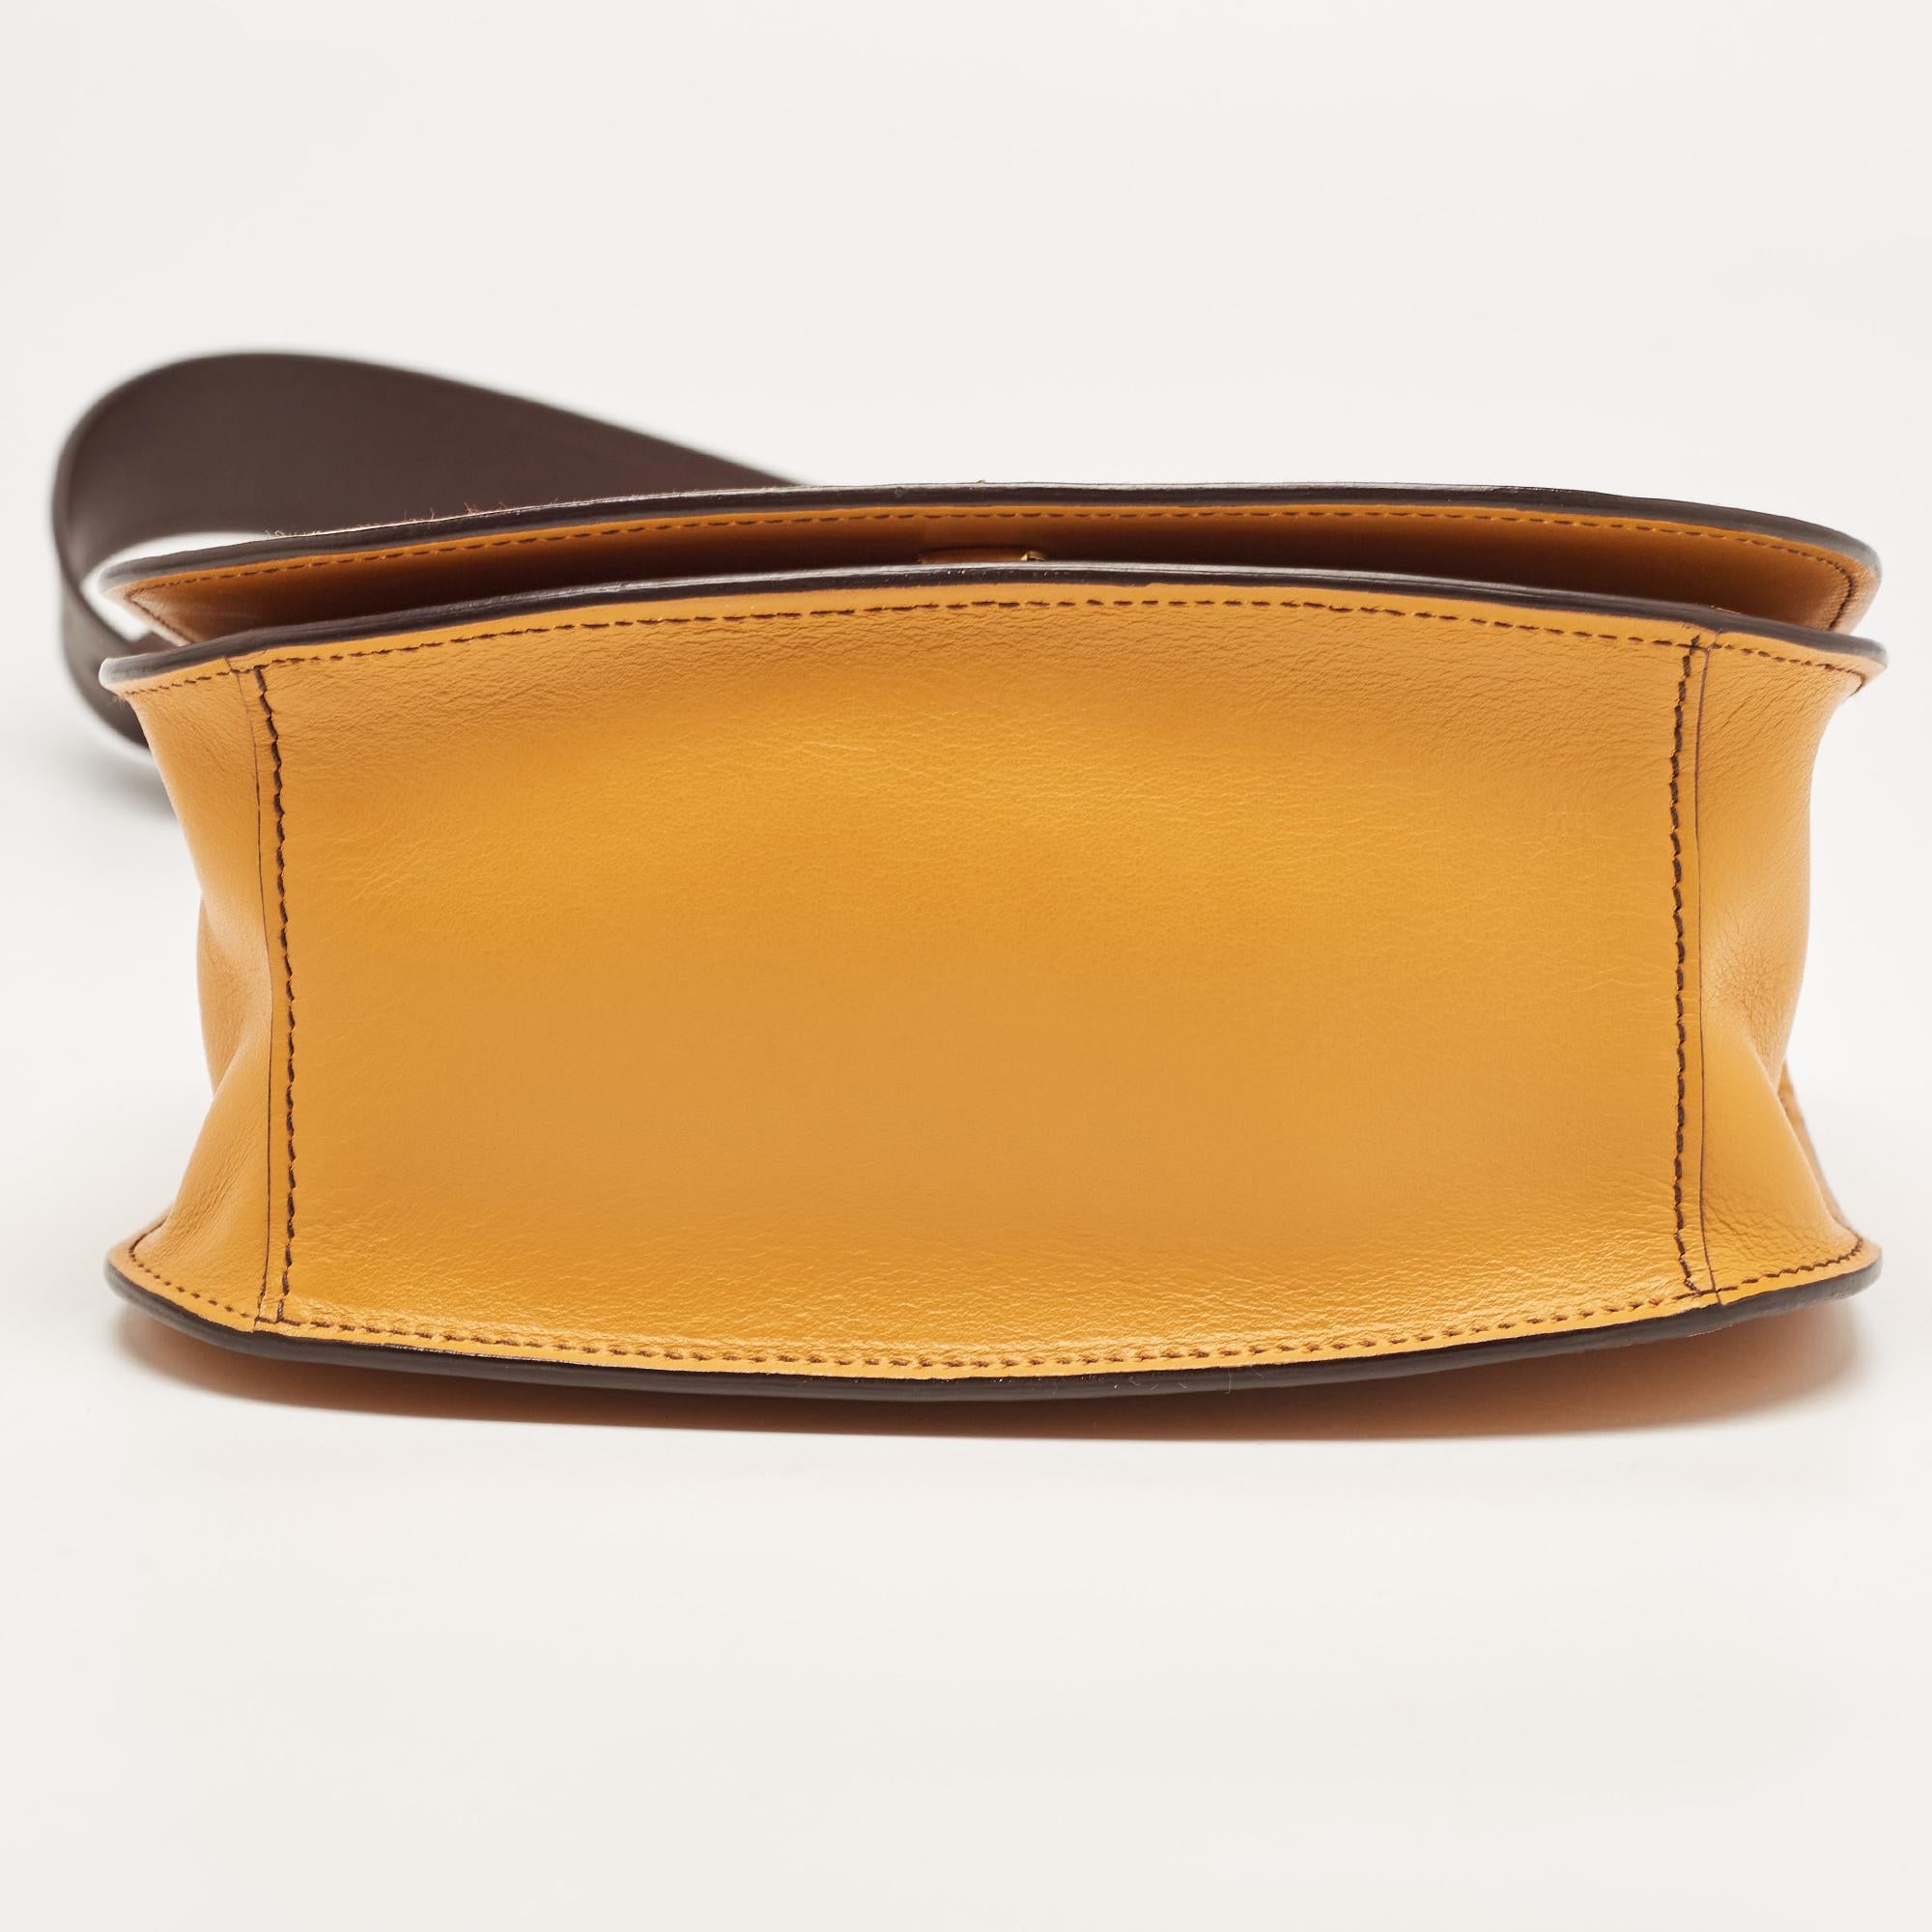 Prada Mustard Yellow/Choco Brown Leather Pionniere Saddle Bag 6